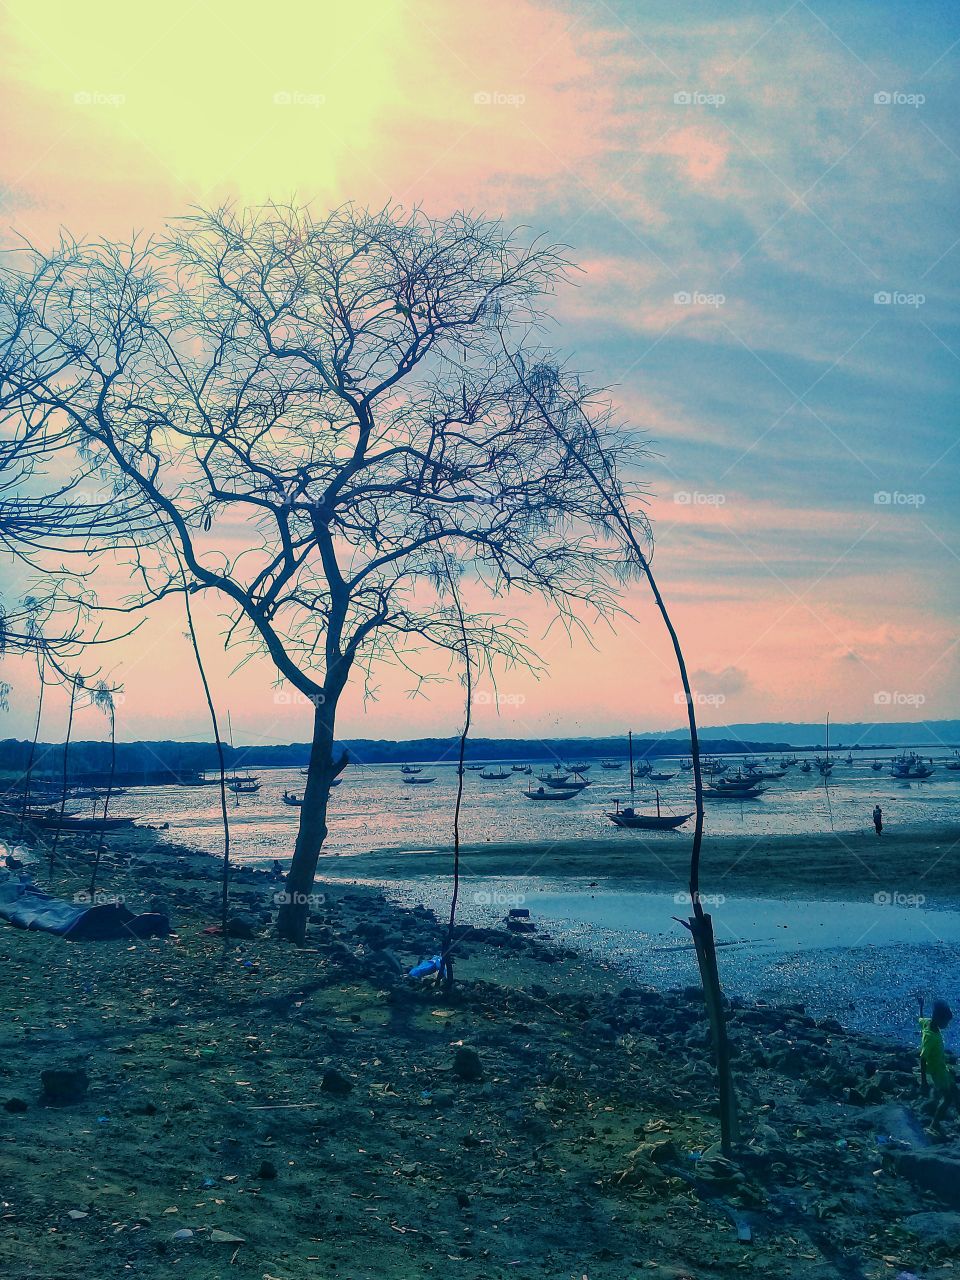 tree, boat, sky, man & sunset